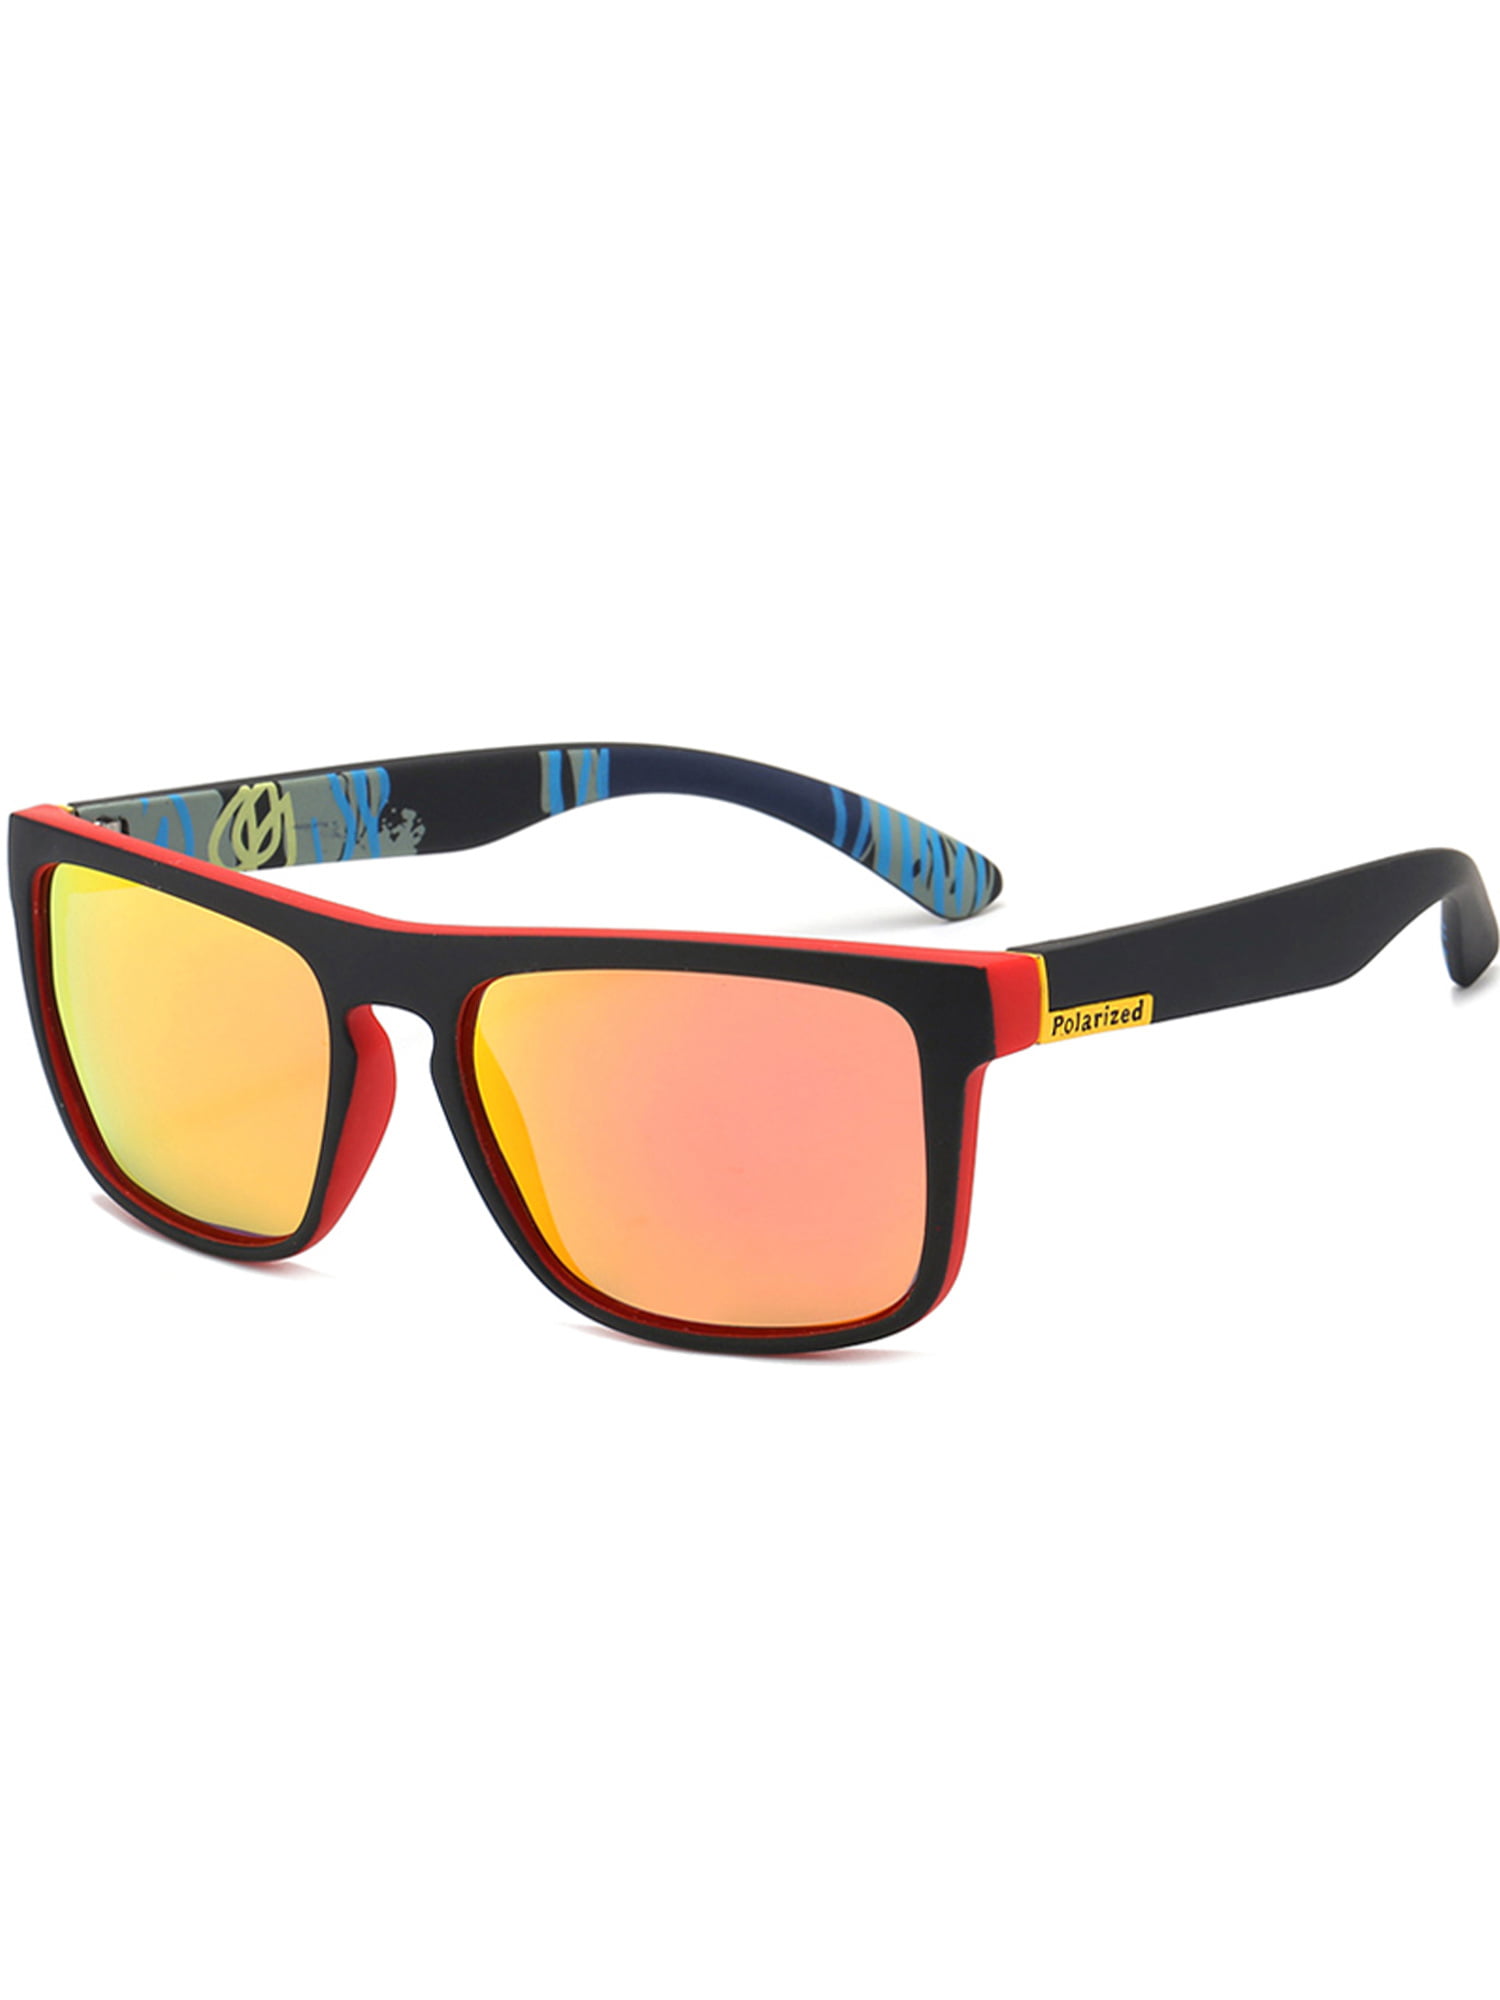 Men's Polarized Sunglasses Driving Sports Square Fashion Outdoor Fishing UV400